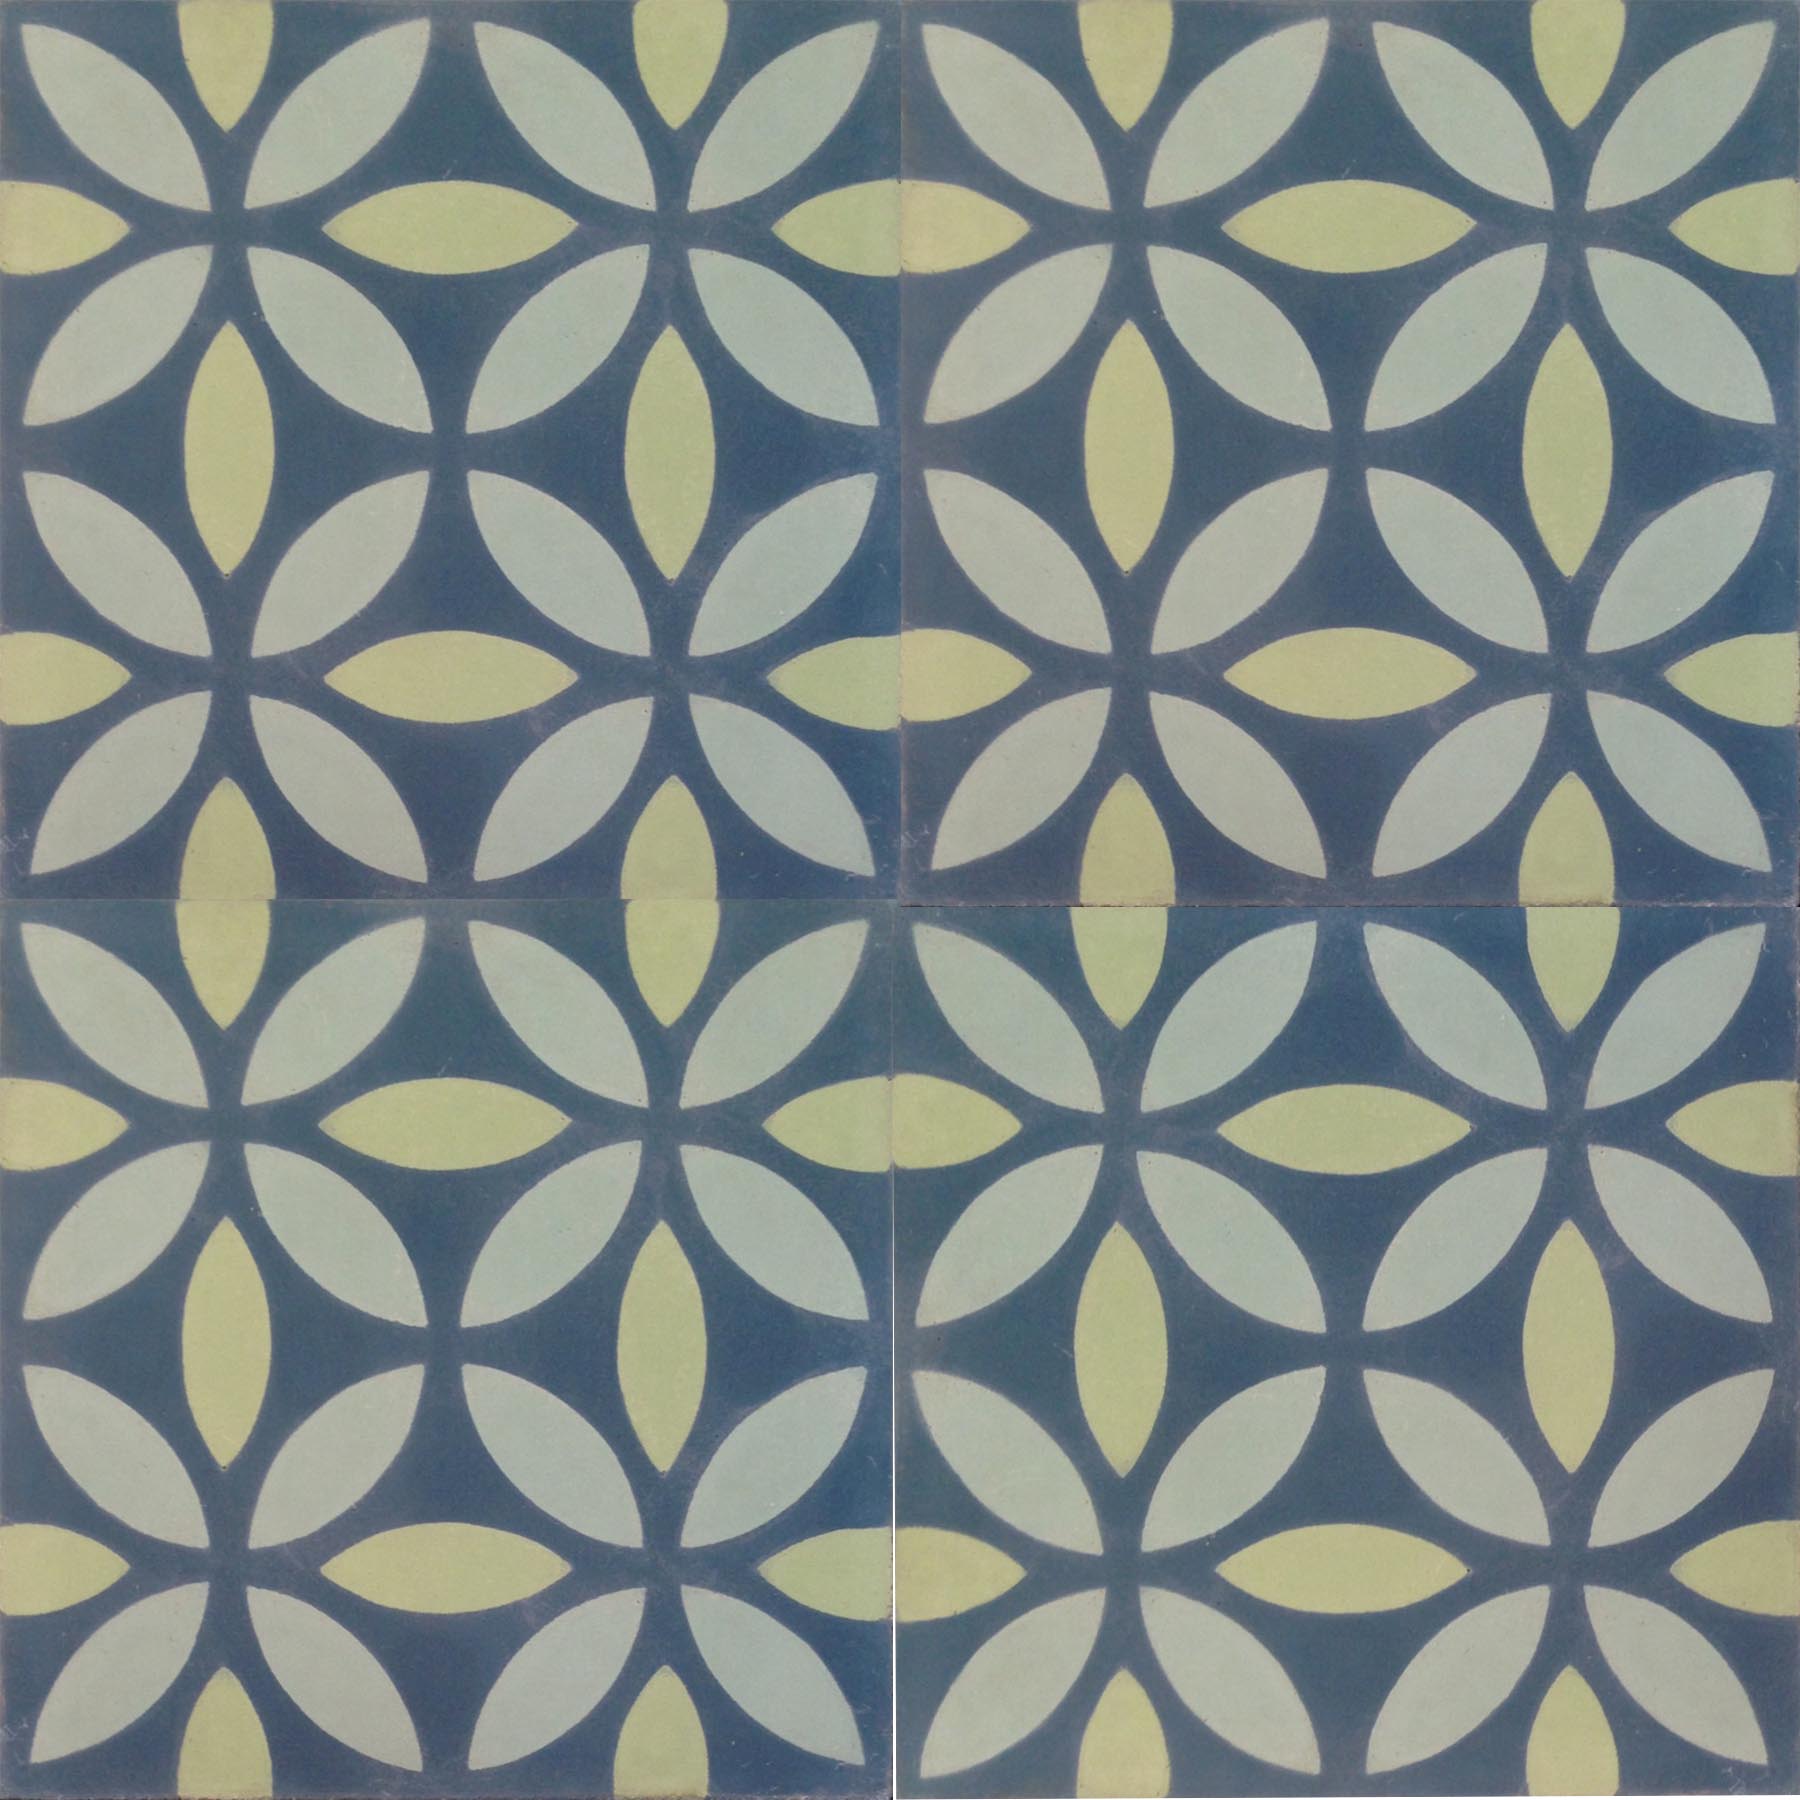 Petals Blue Green Cement Tile